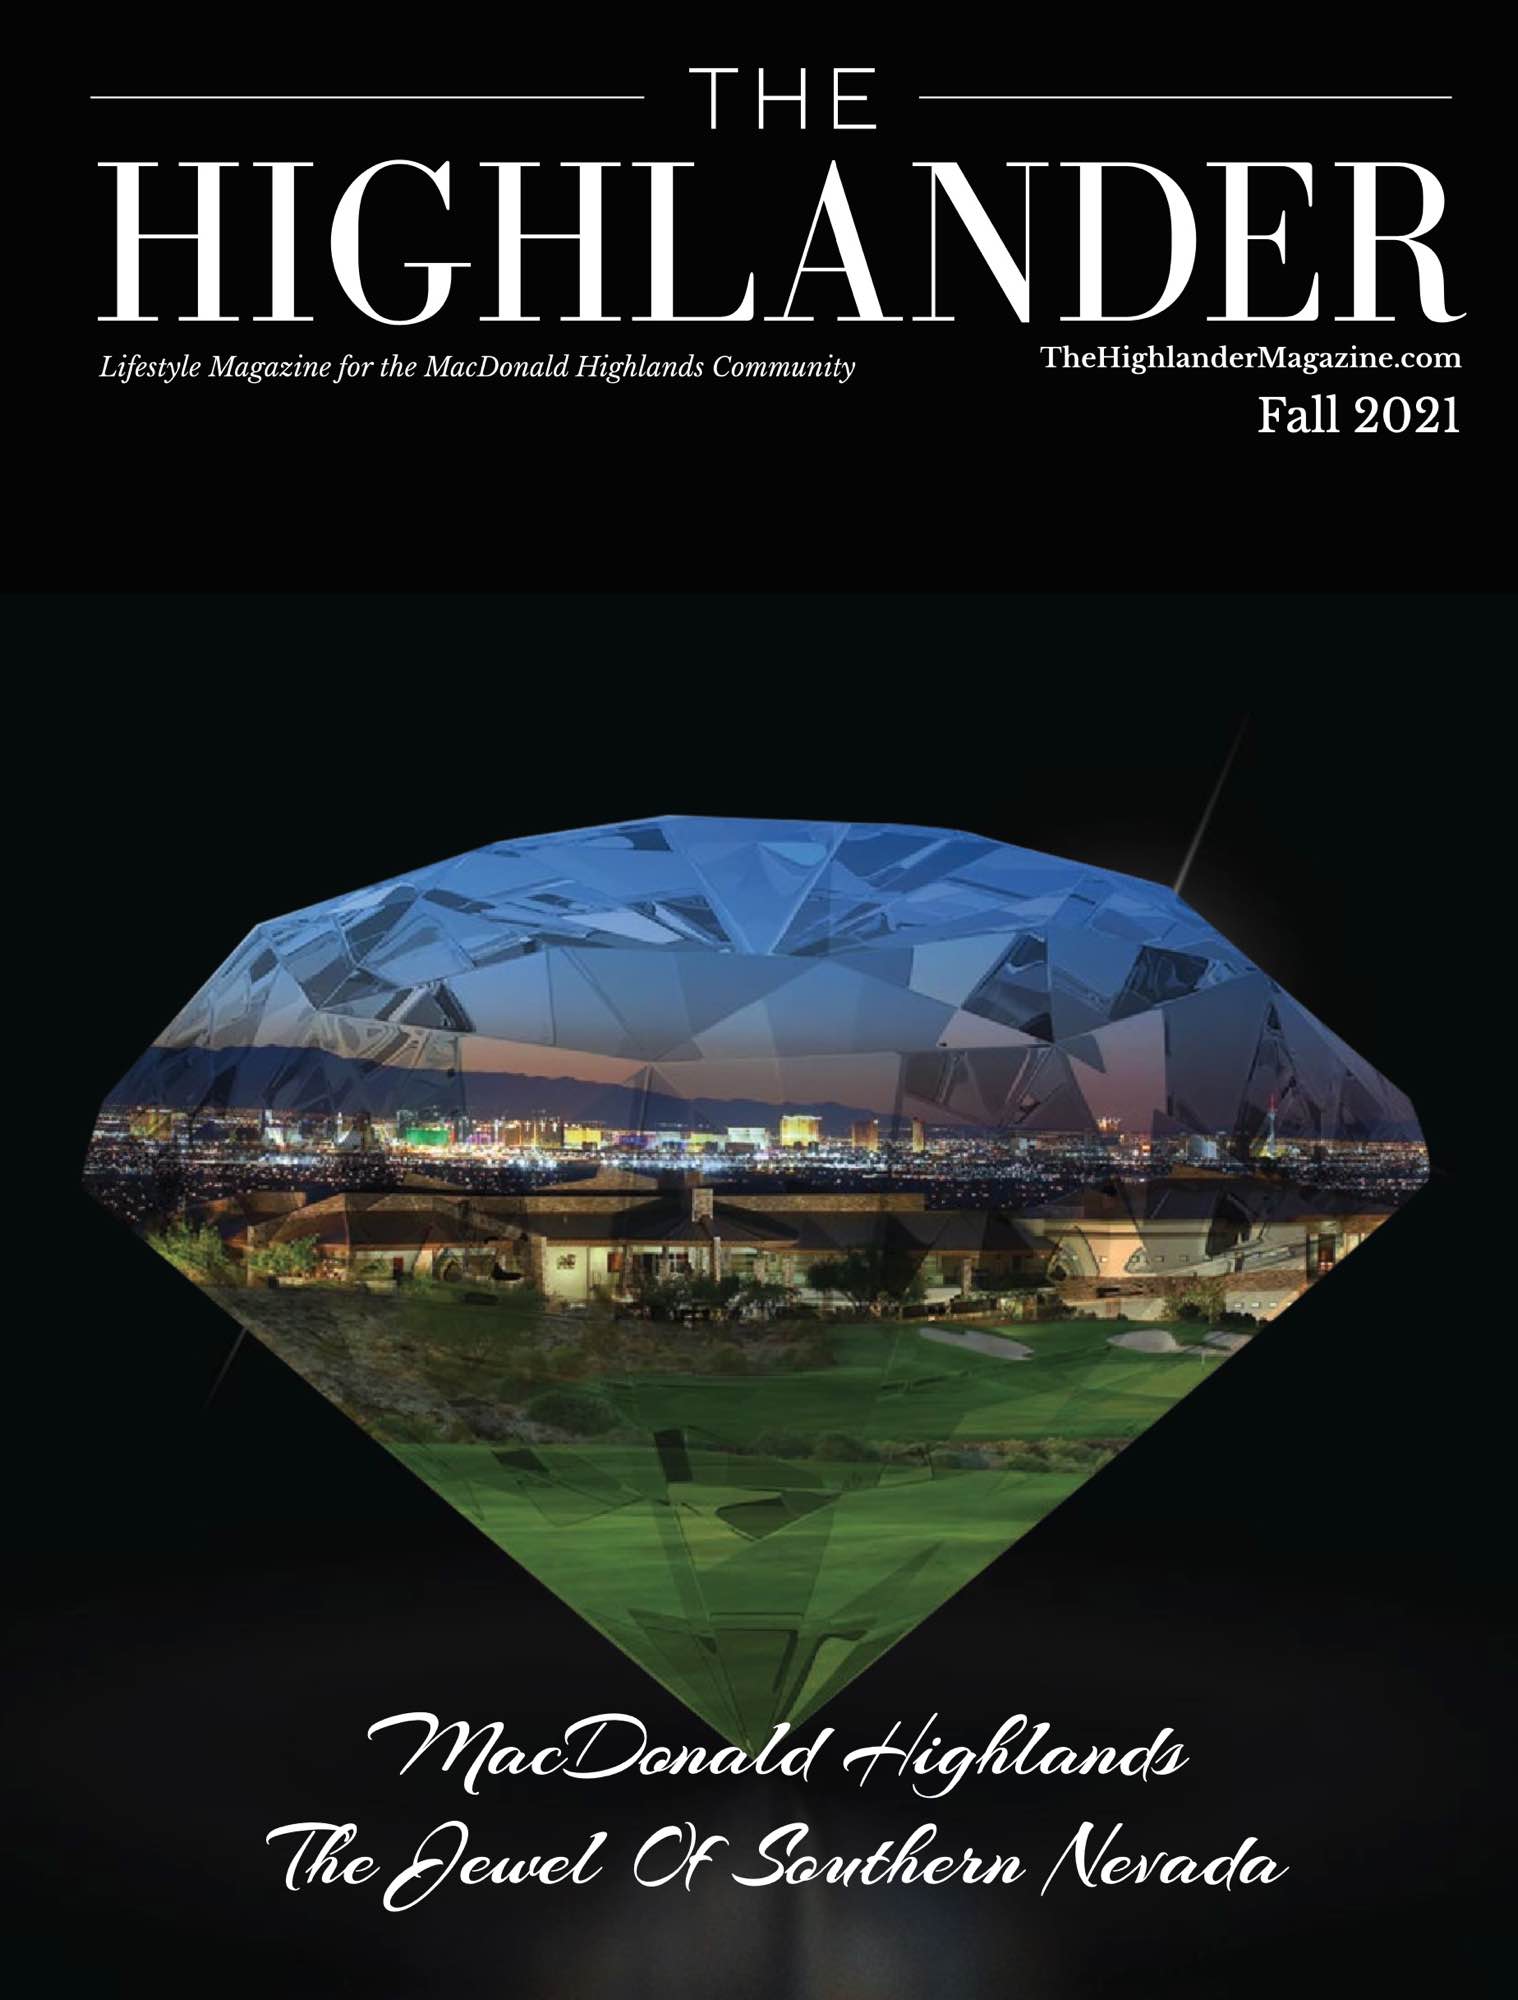 The Highlander fall 2021